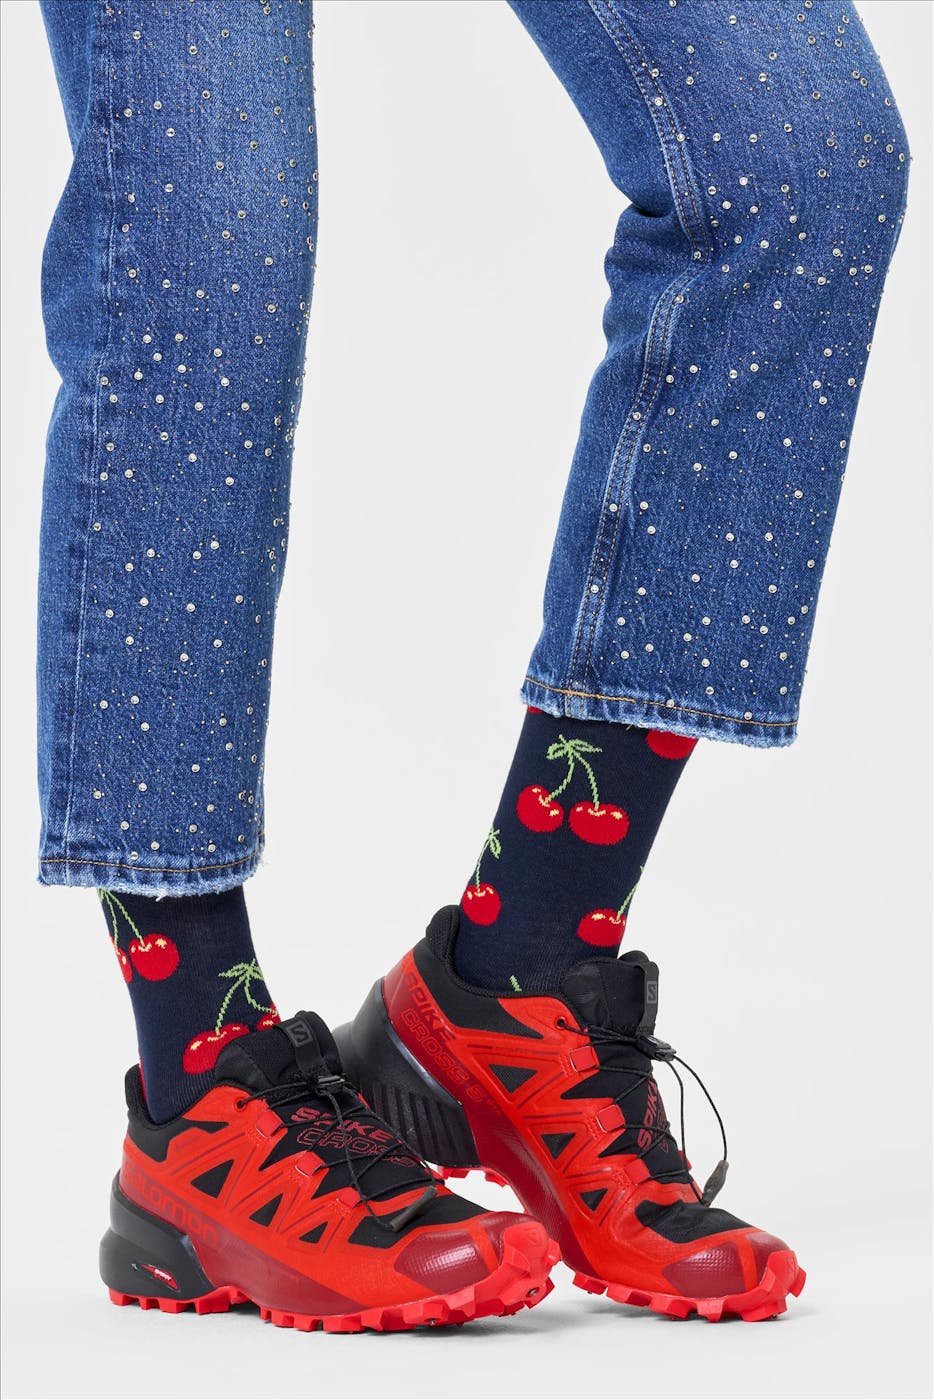 Happy Socks - Donkerblauwe Cherry sokken, maat: 41-46